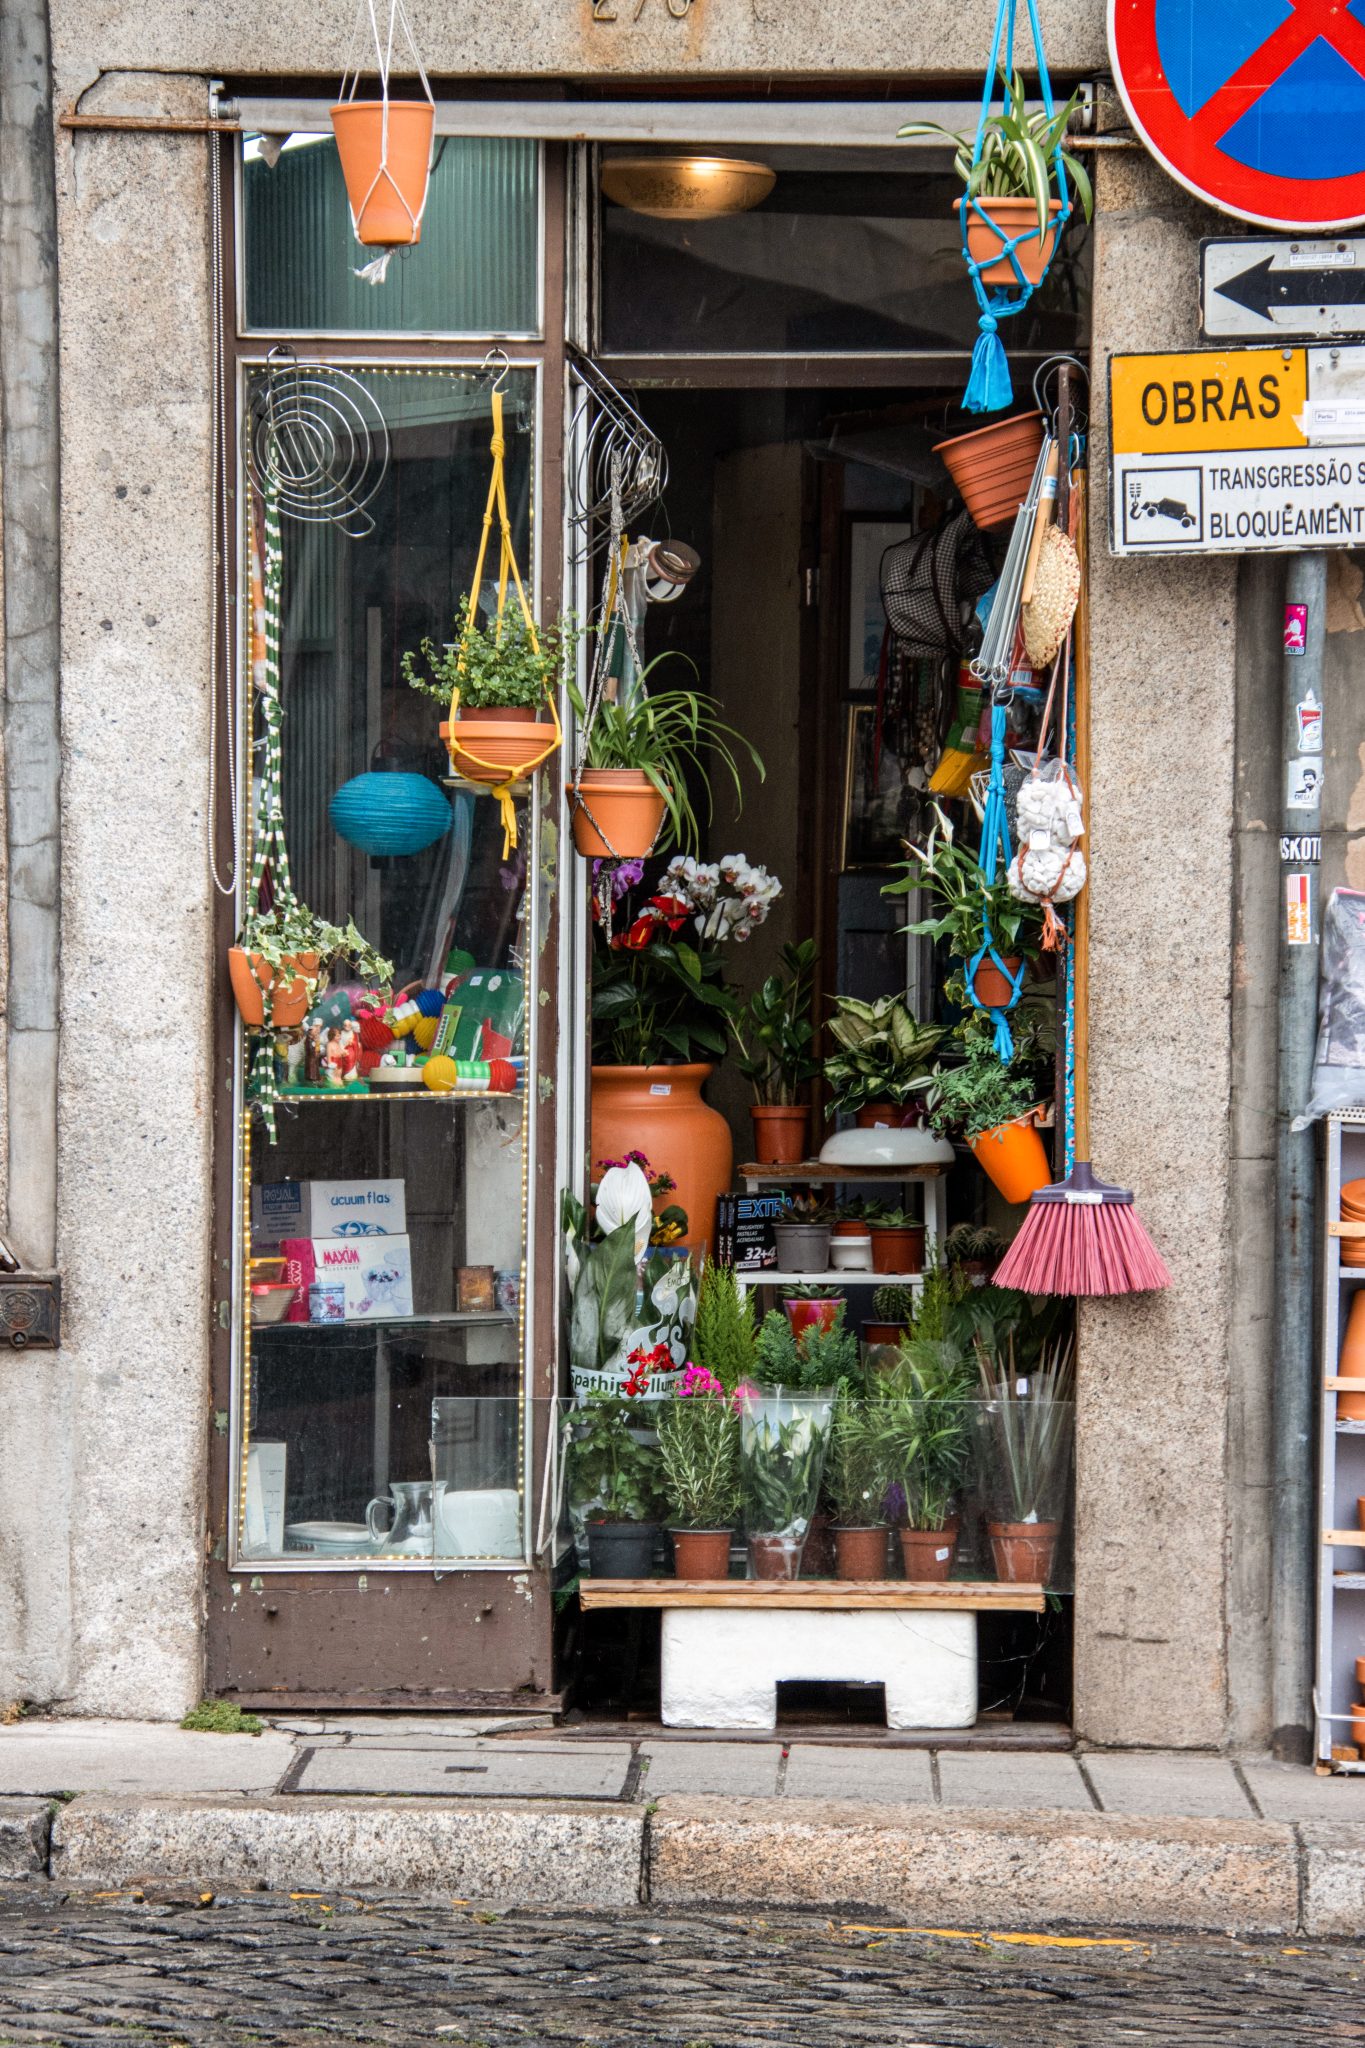 Small storefront door in Porto, Portugal